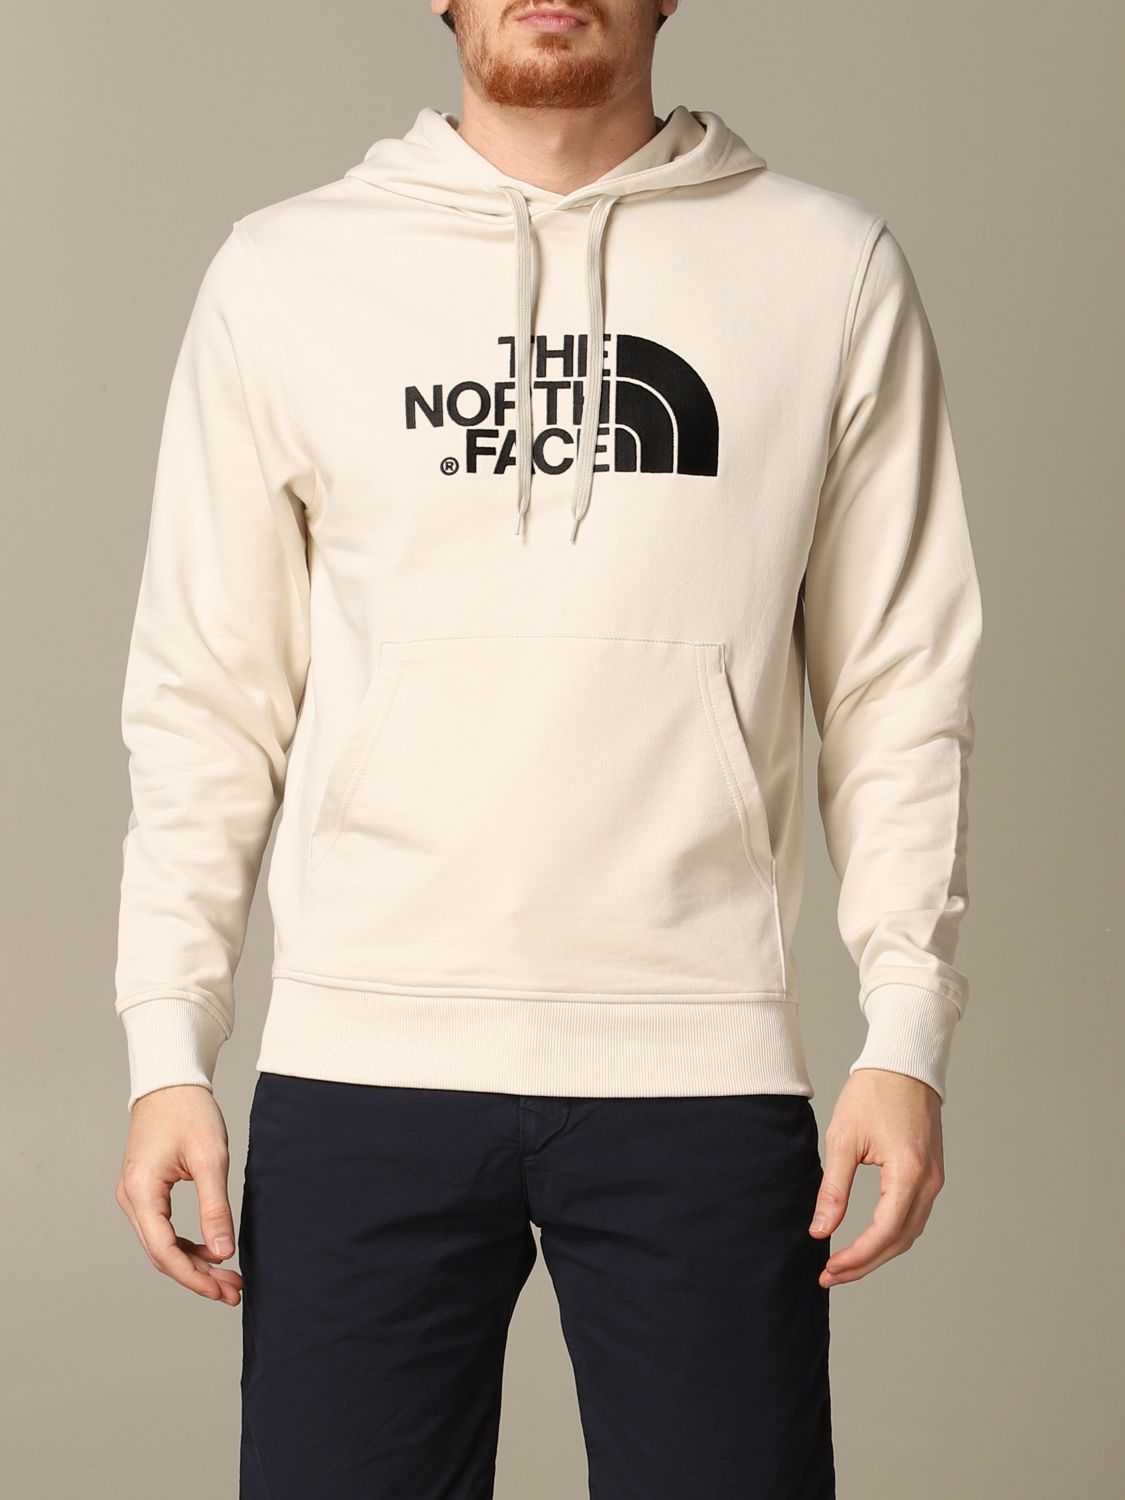 north face sweatshirt no hood